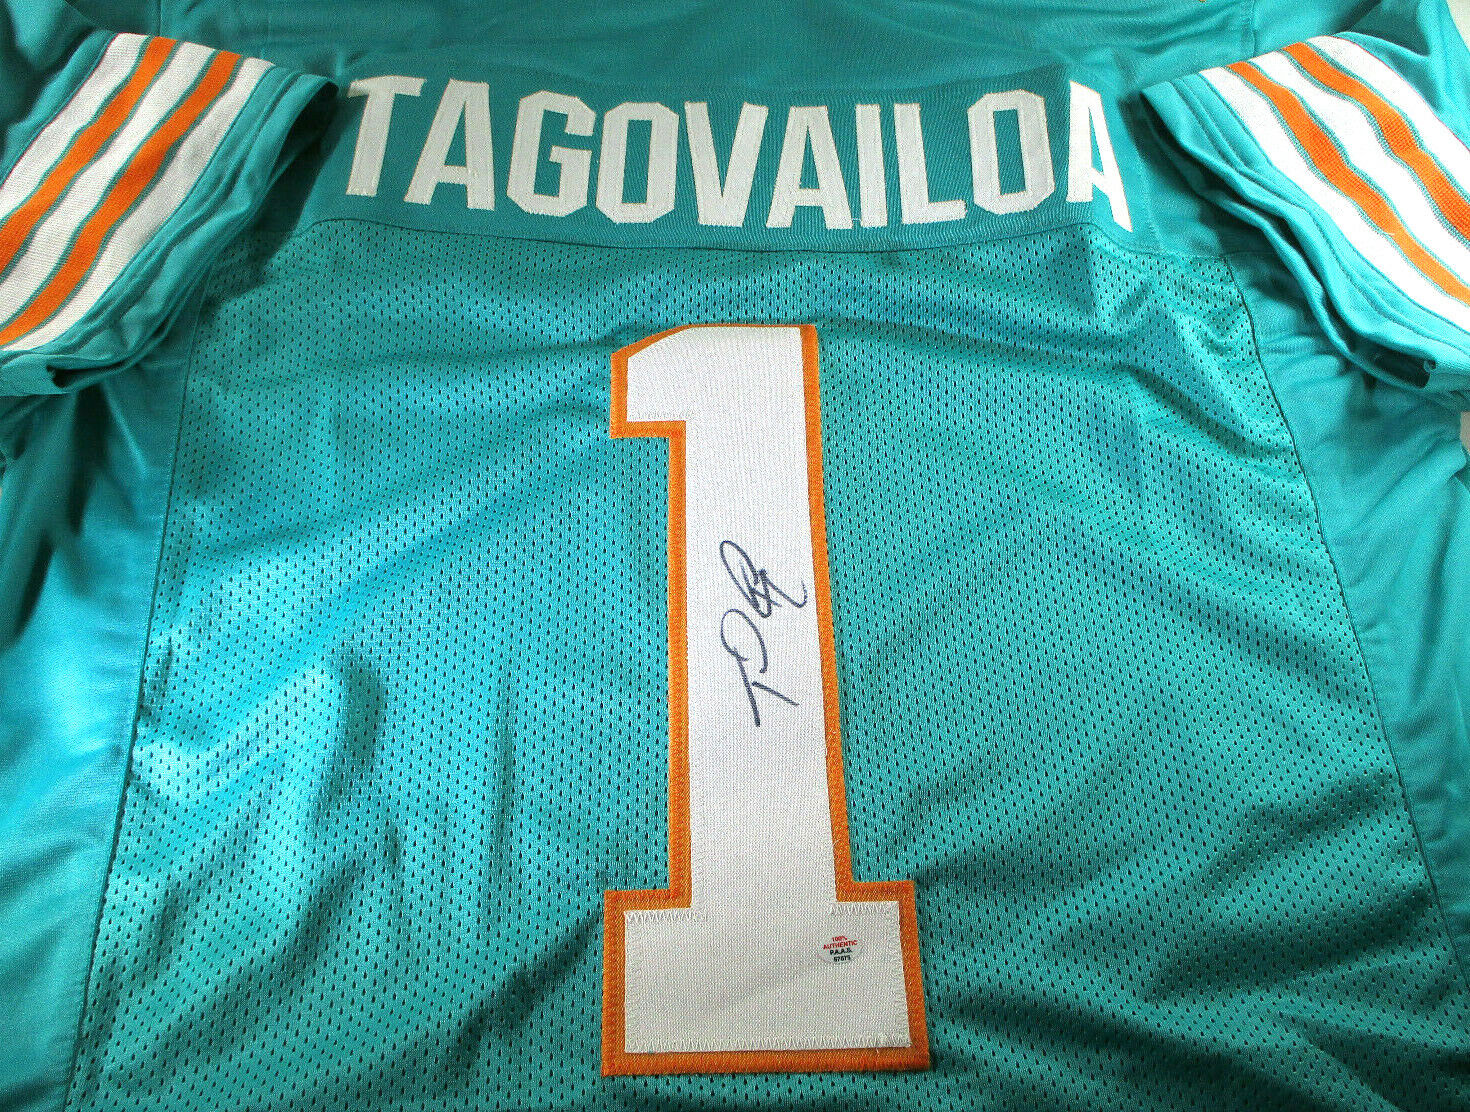 Tua Tagovailo / Autographed Miami Dolphins Teal Custom Football Jersey / COA